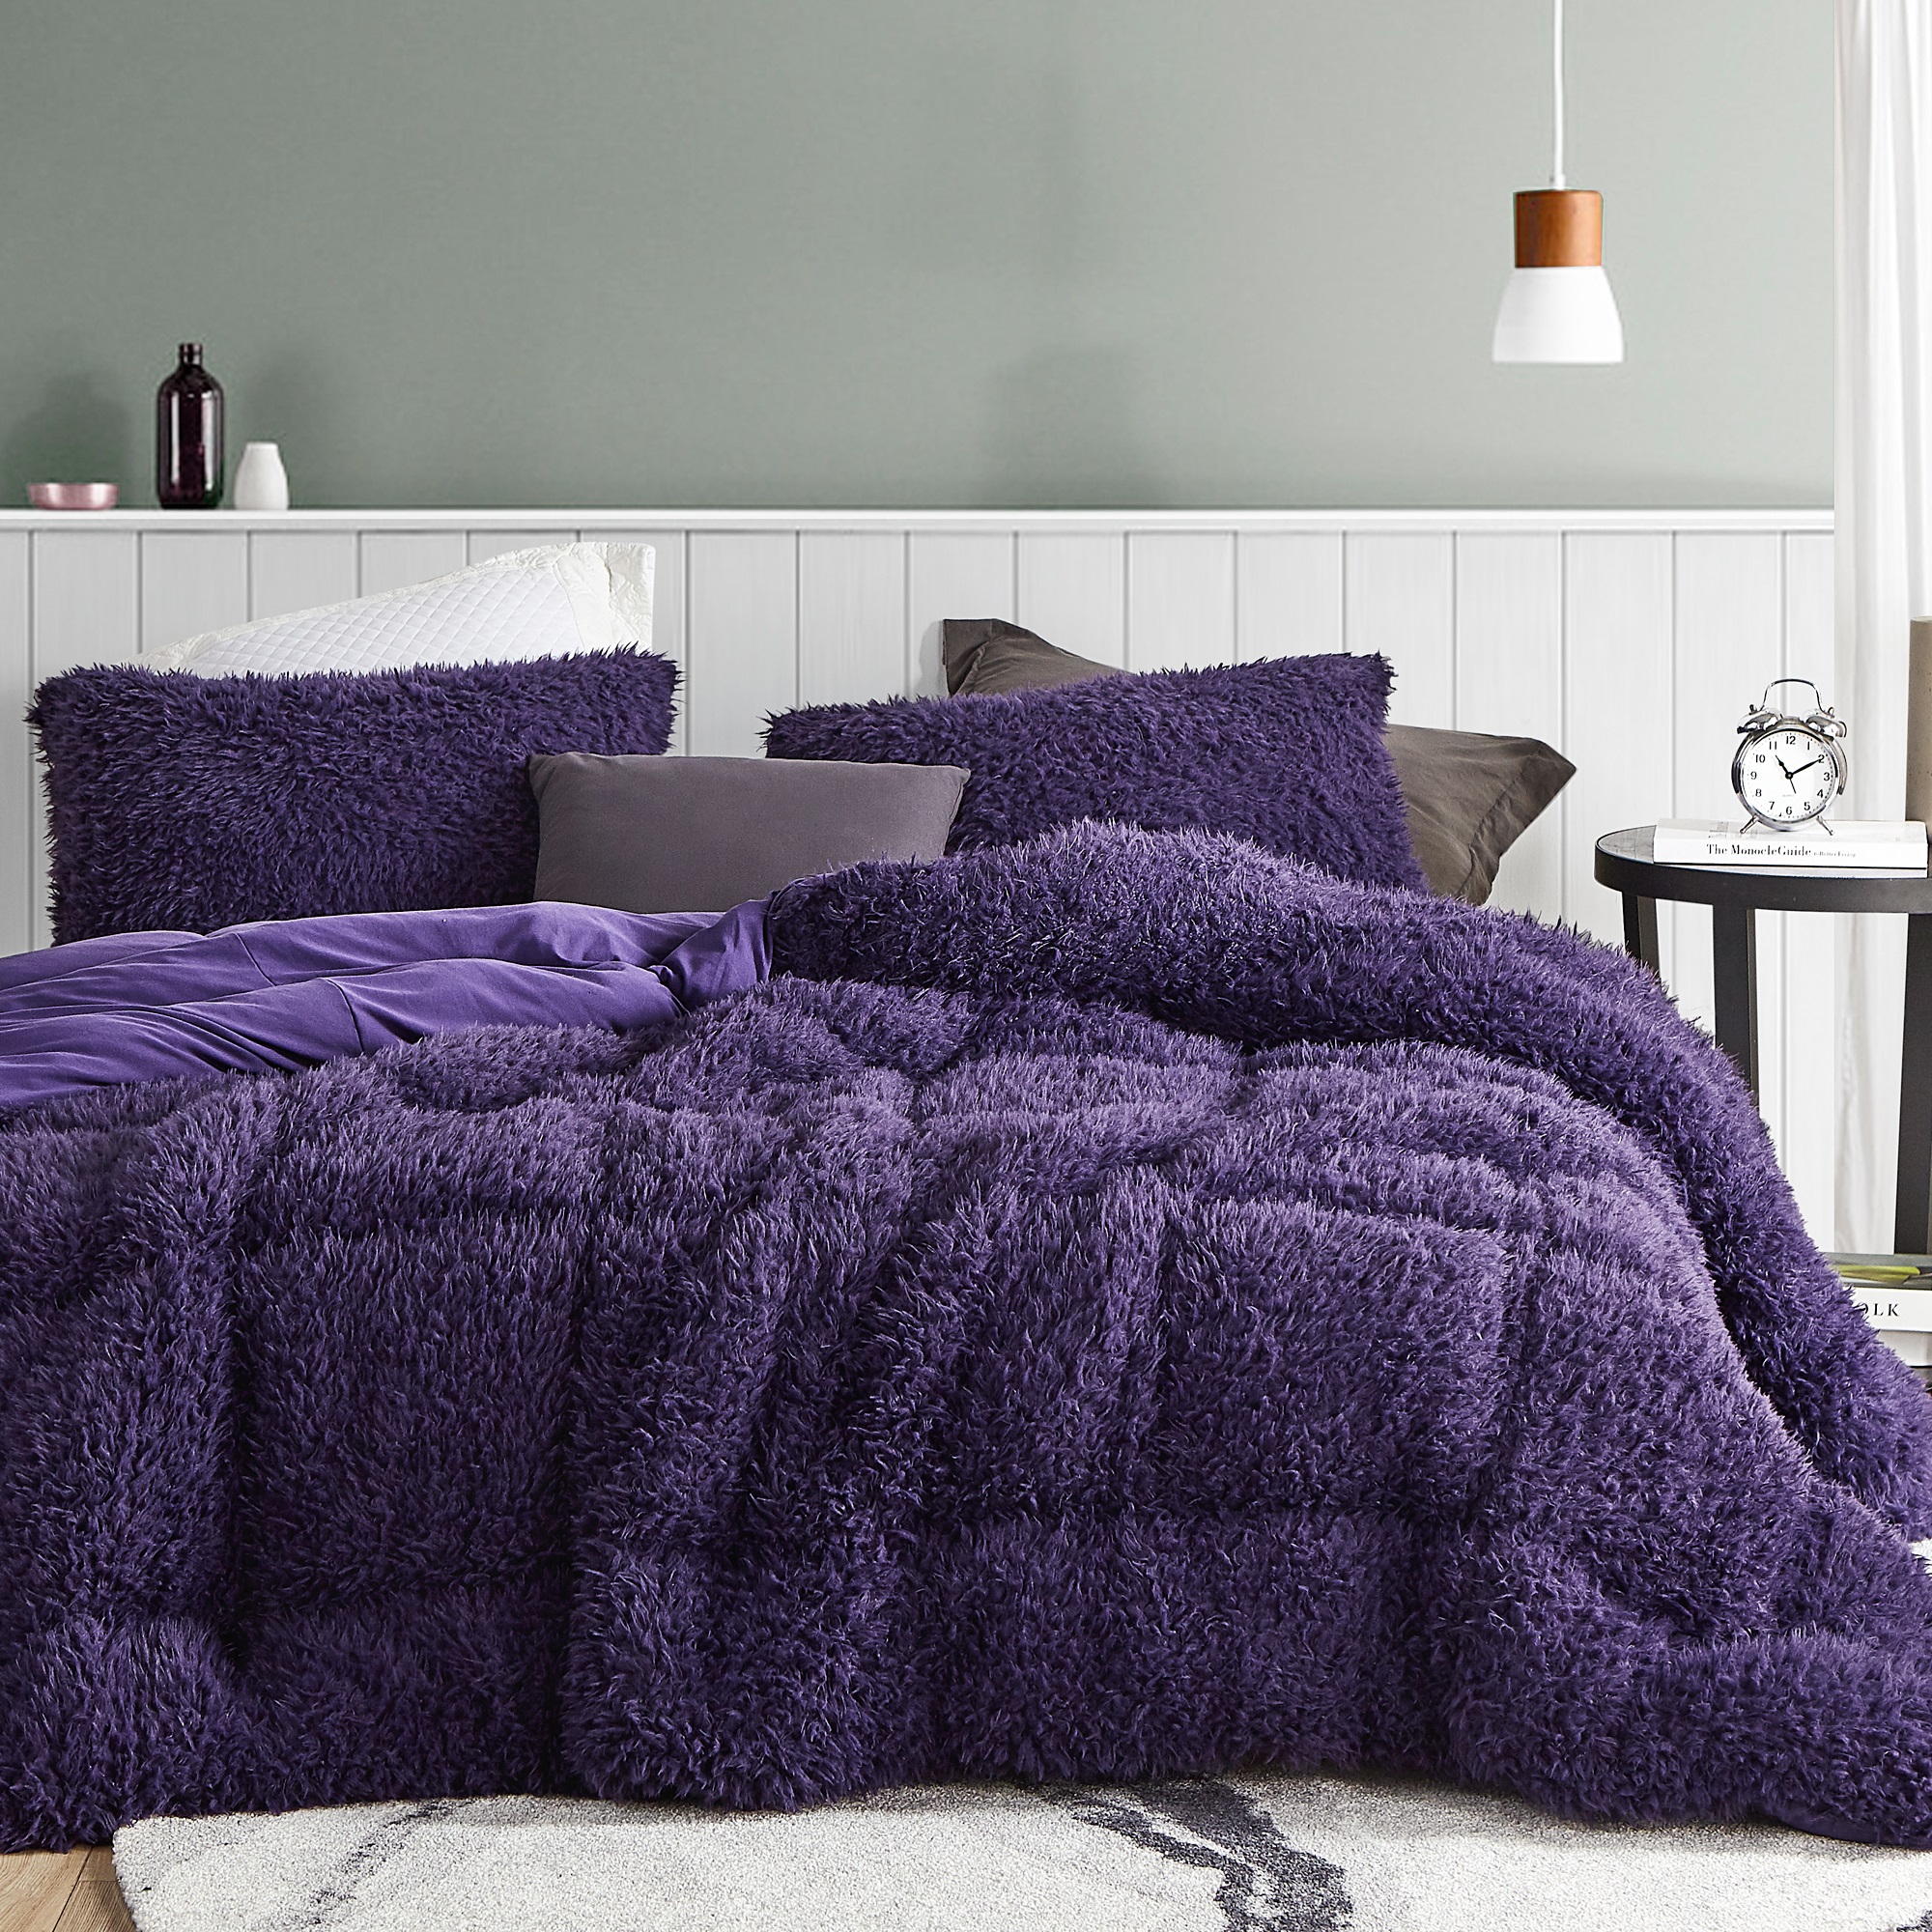 Queen of Sleep - Coma Inducer Oversized Comforter - Purple Reign